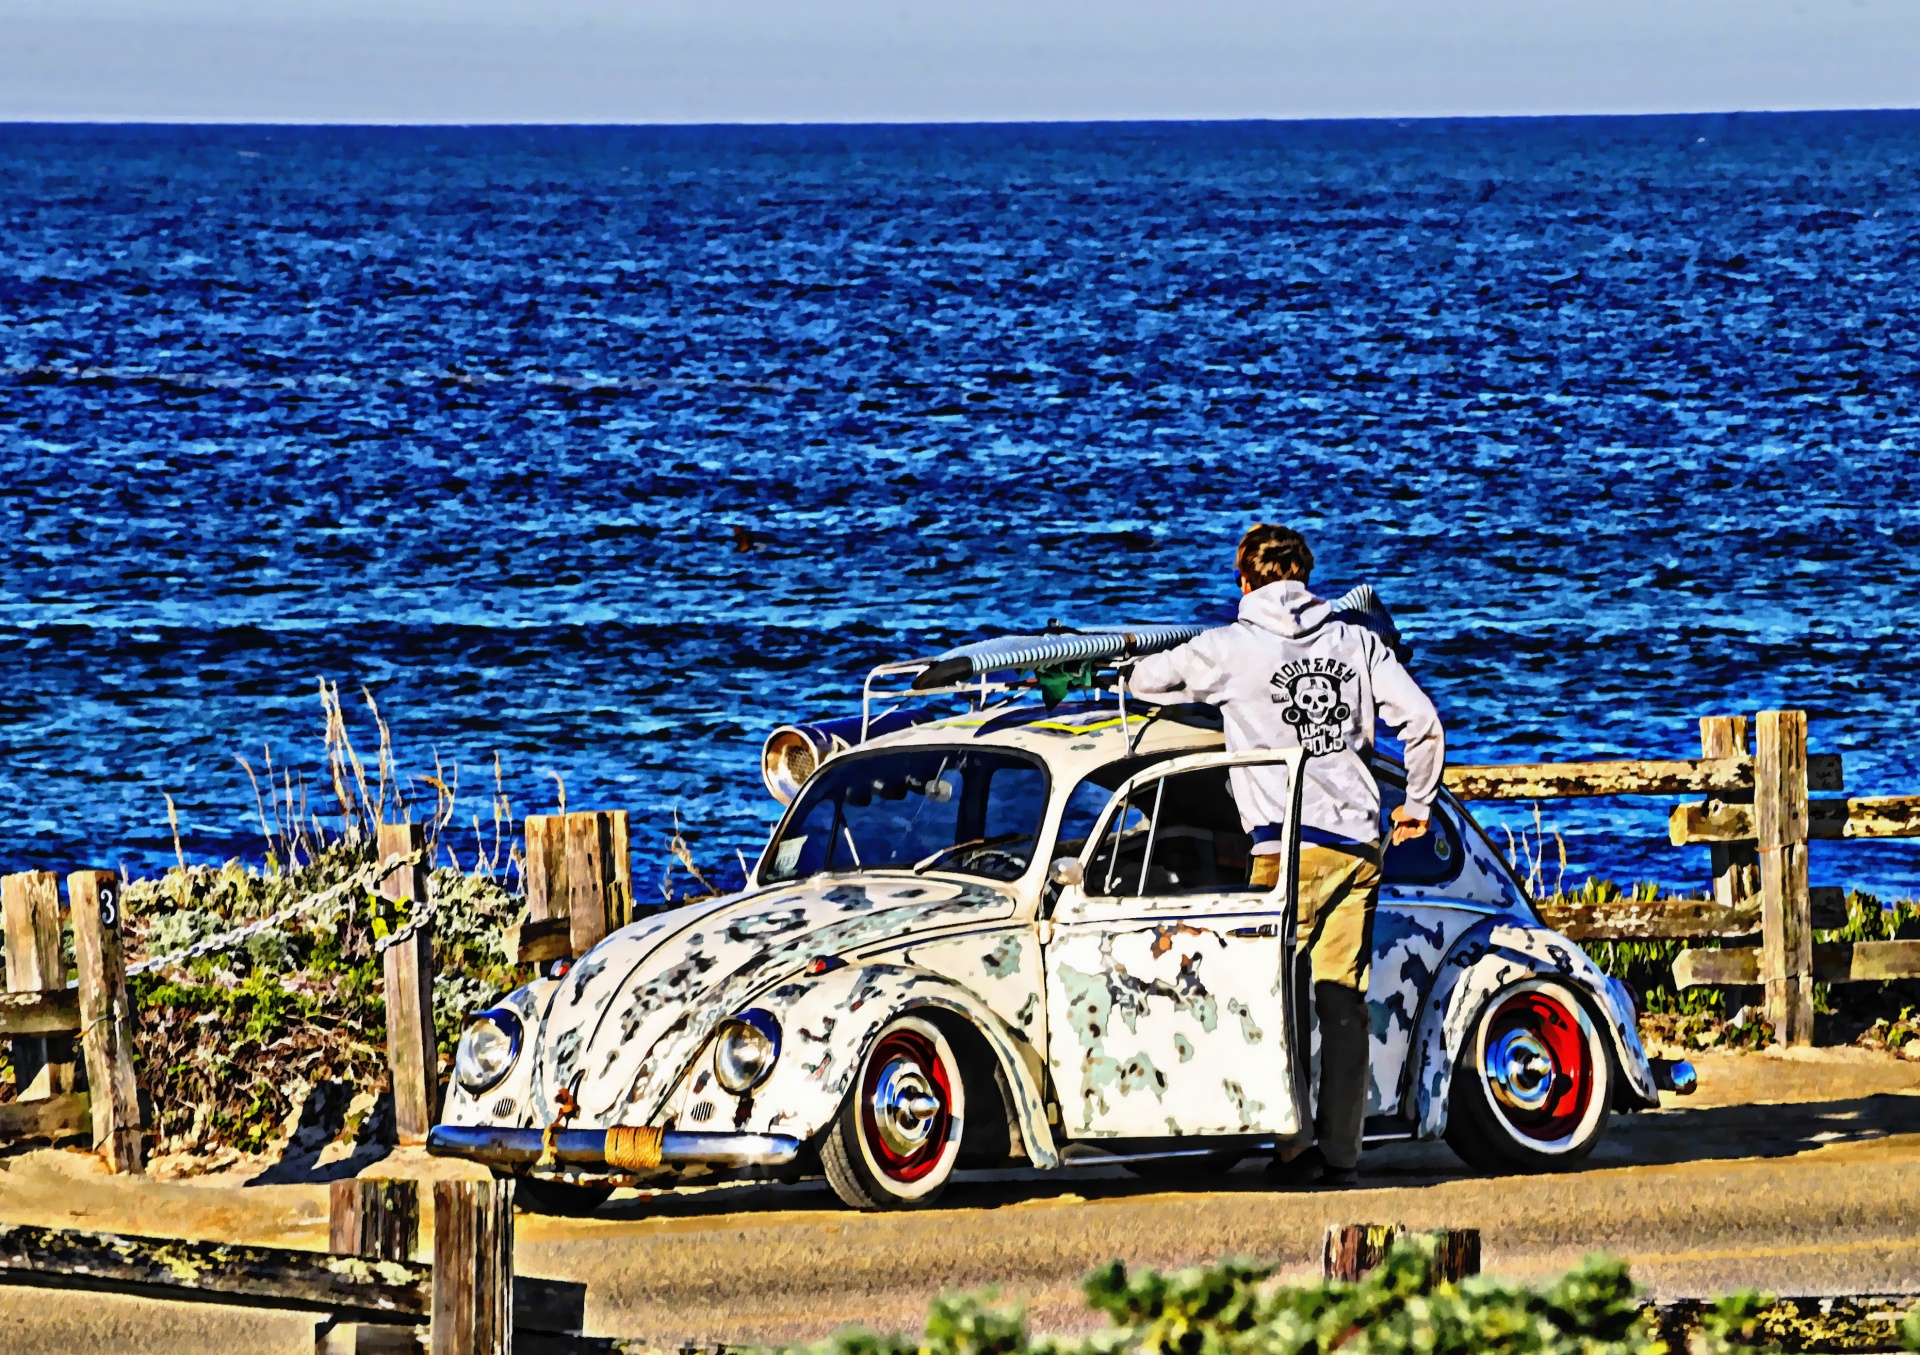 old,vintage,antique,classic,bug,volkswagen,surfer,ocean,beach,surfing,artis...